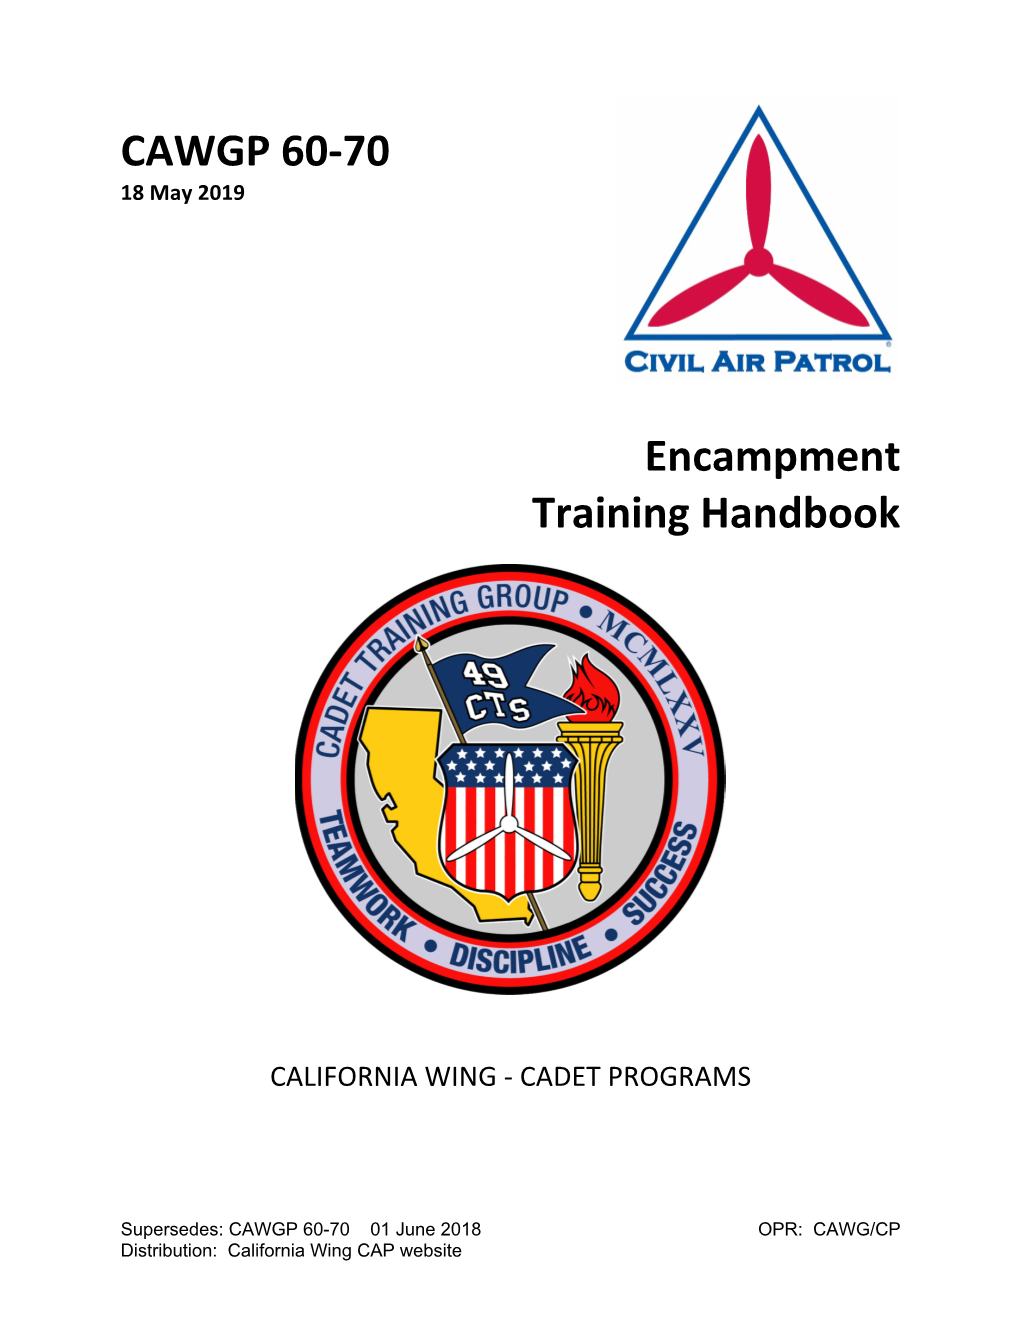 CAWGP 60-70 (CAWG Encampment Training Handbook)